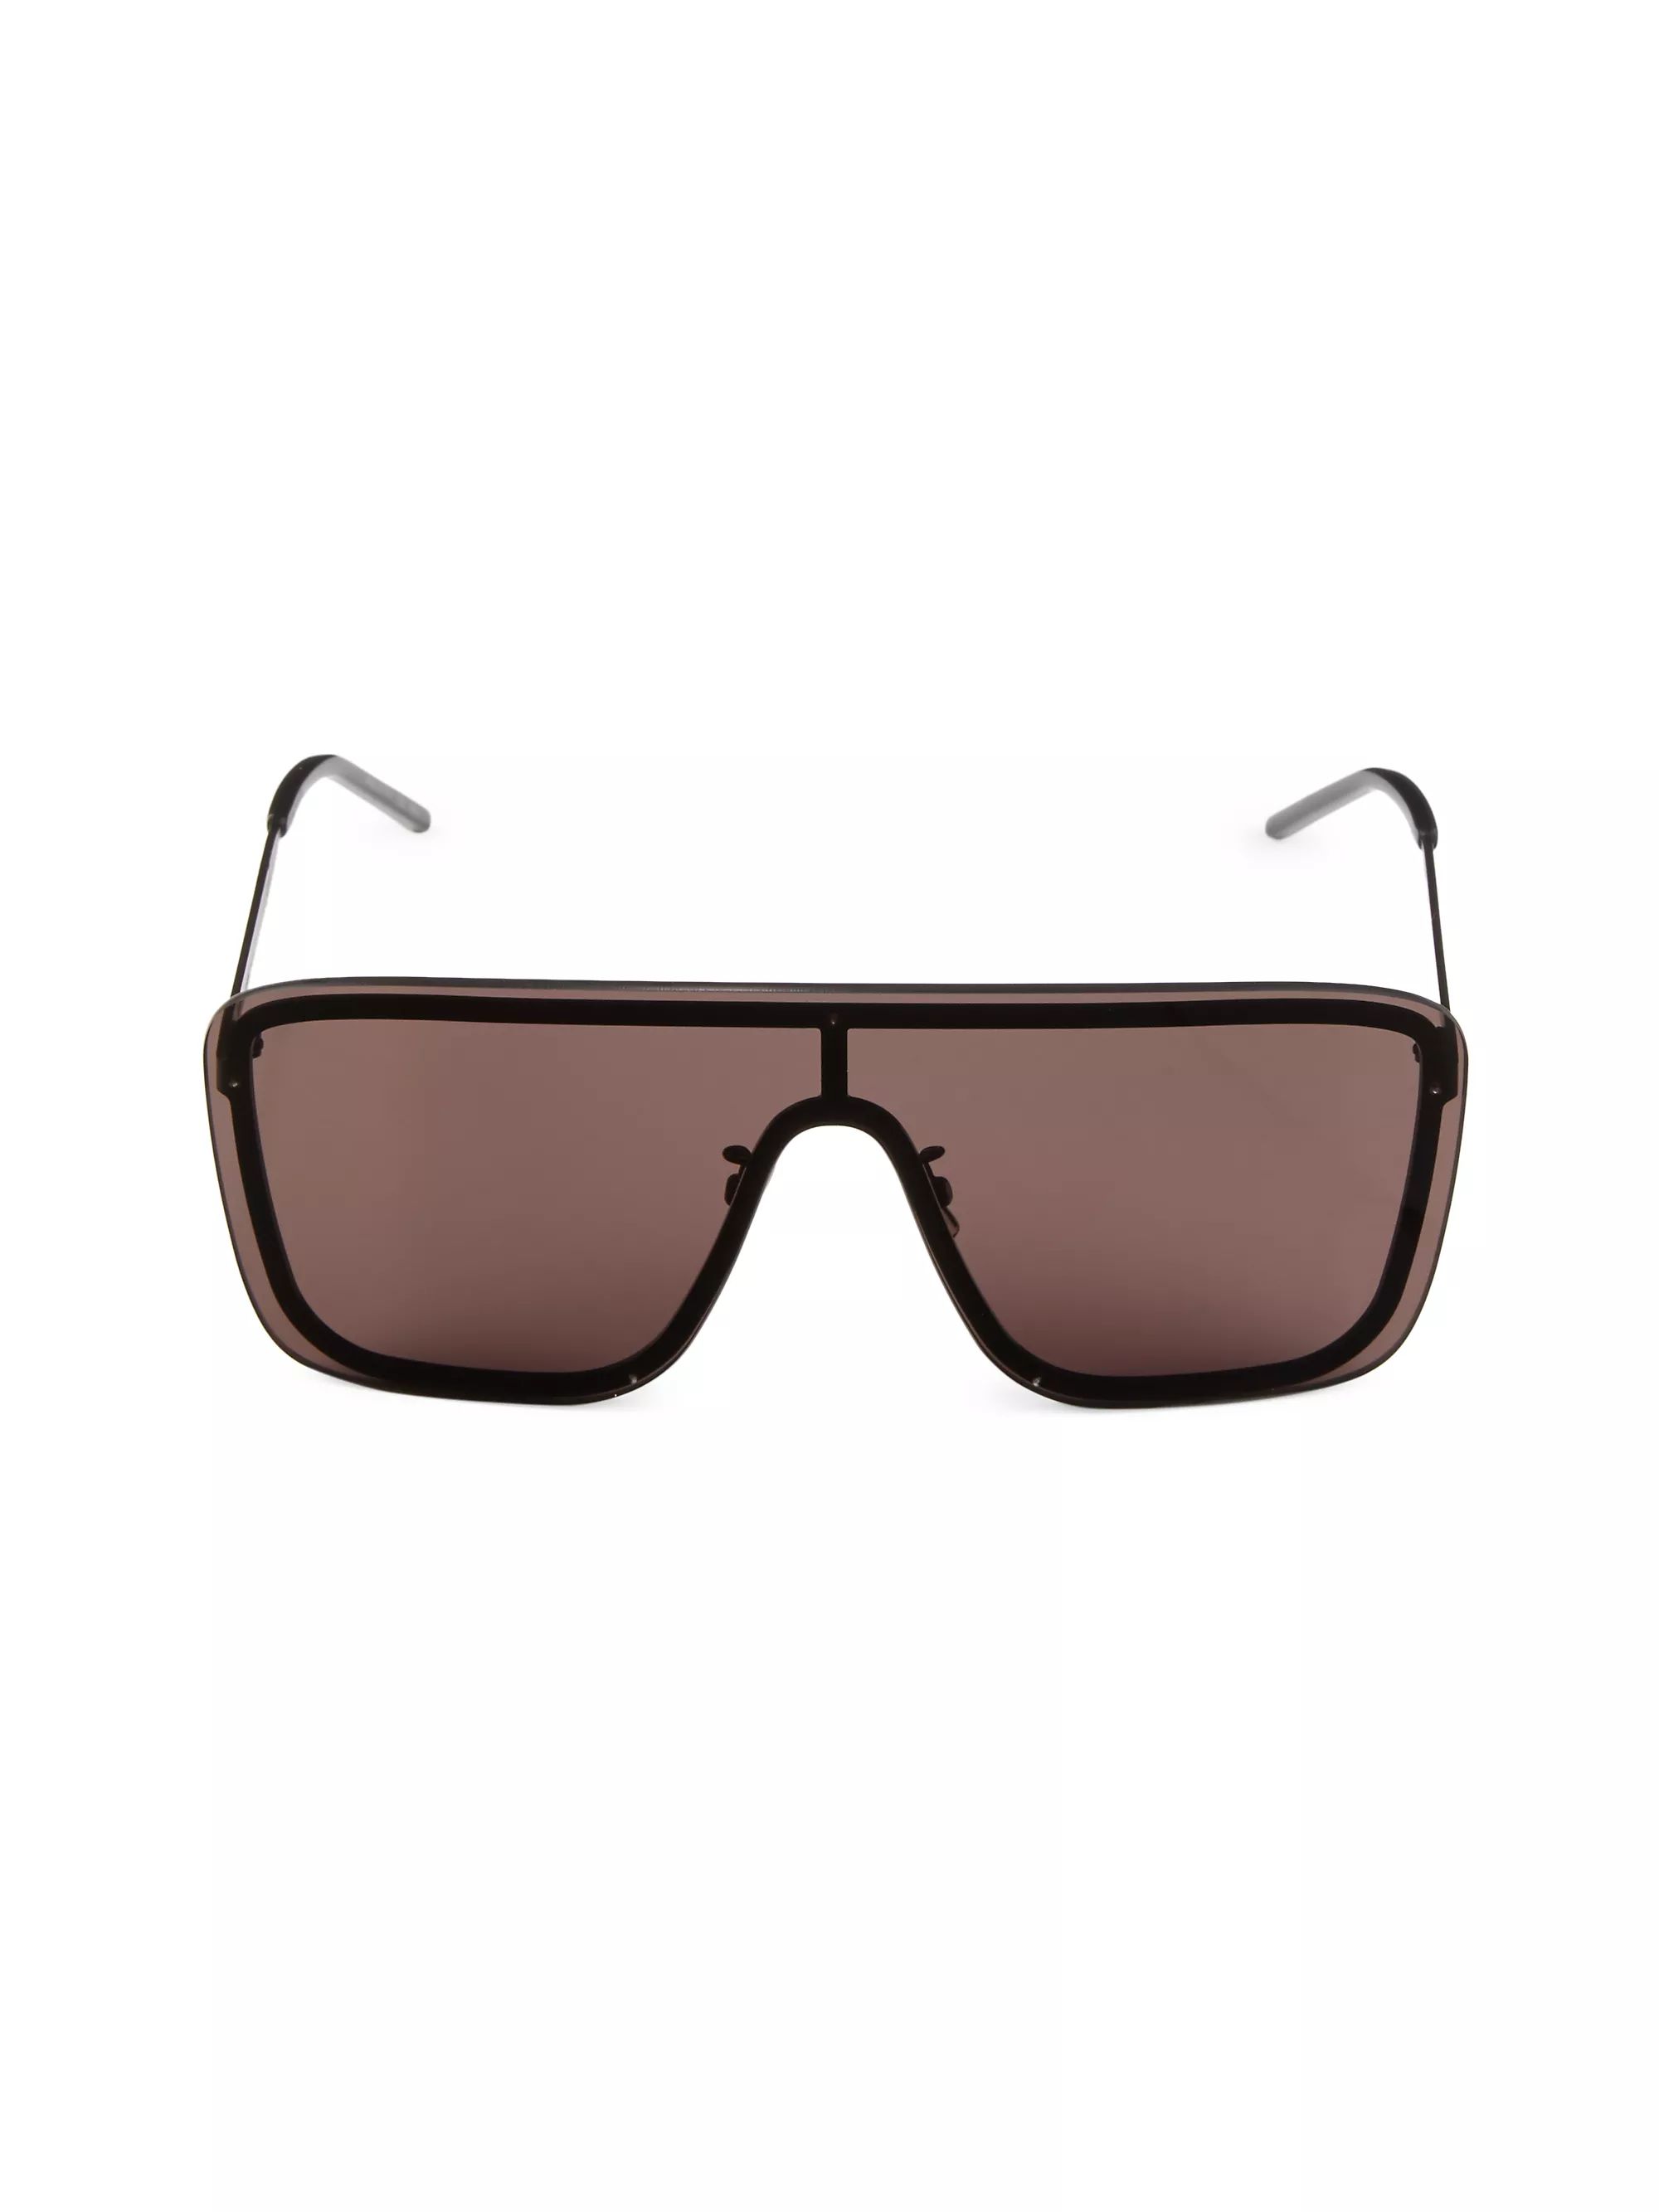 Shop Saint Laurent 99MM Mask Sunglasses | Saks Fifth Avenue | Saks Fifth Avenue